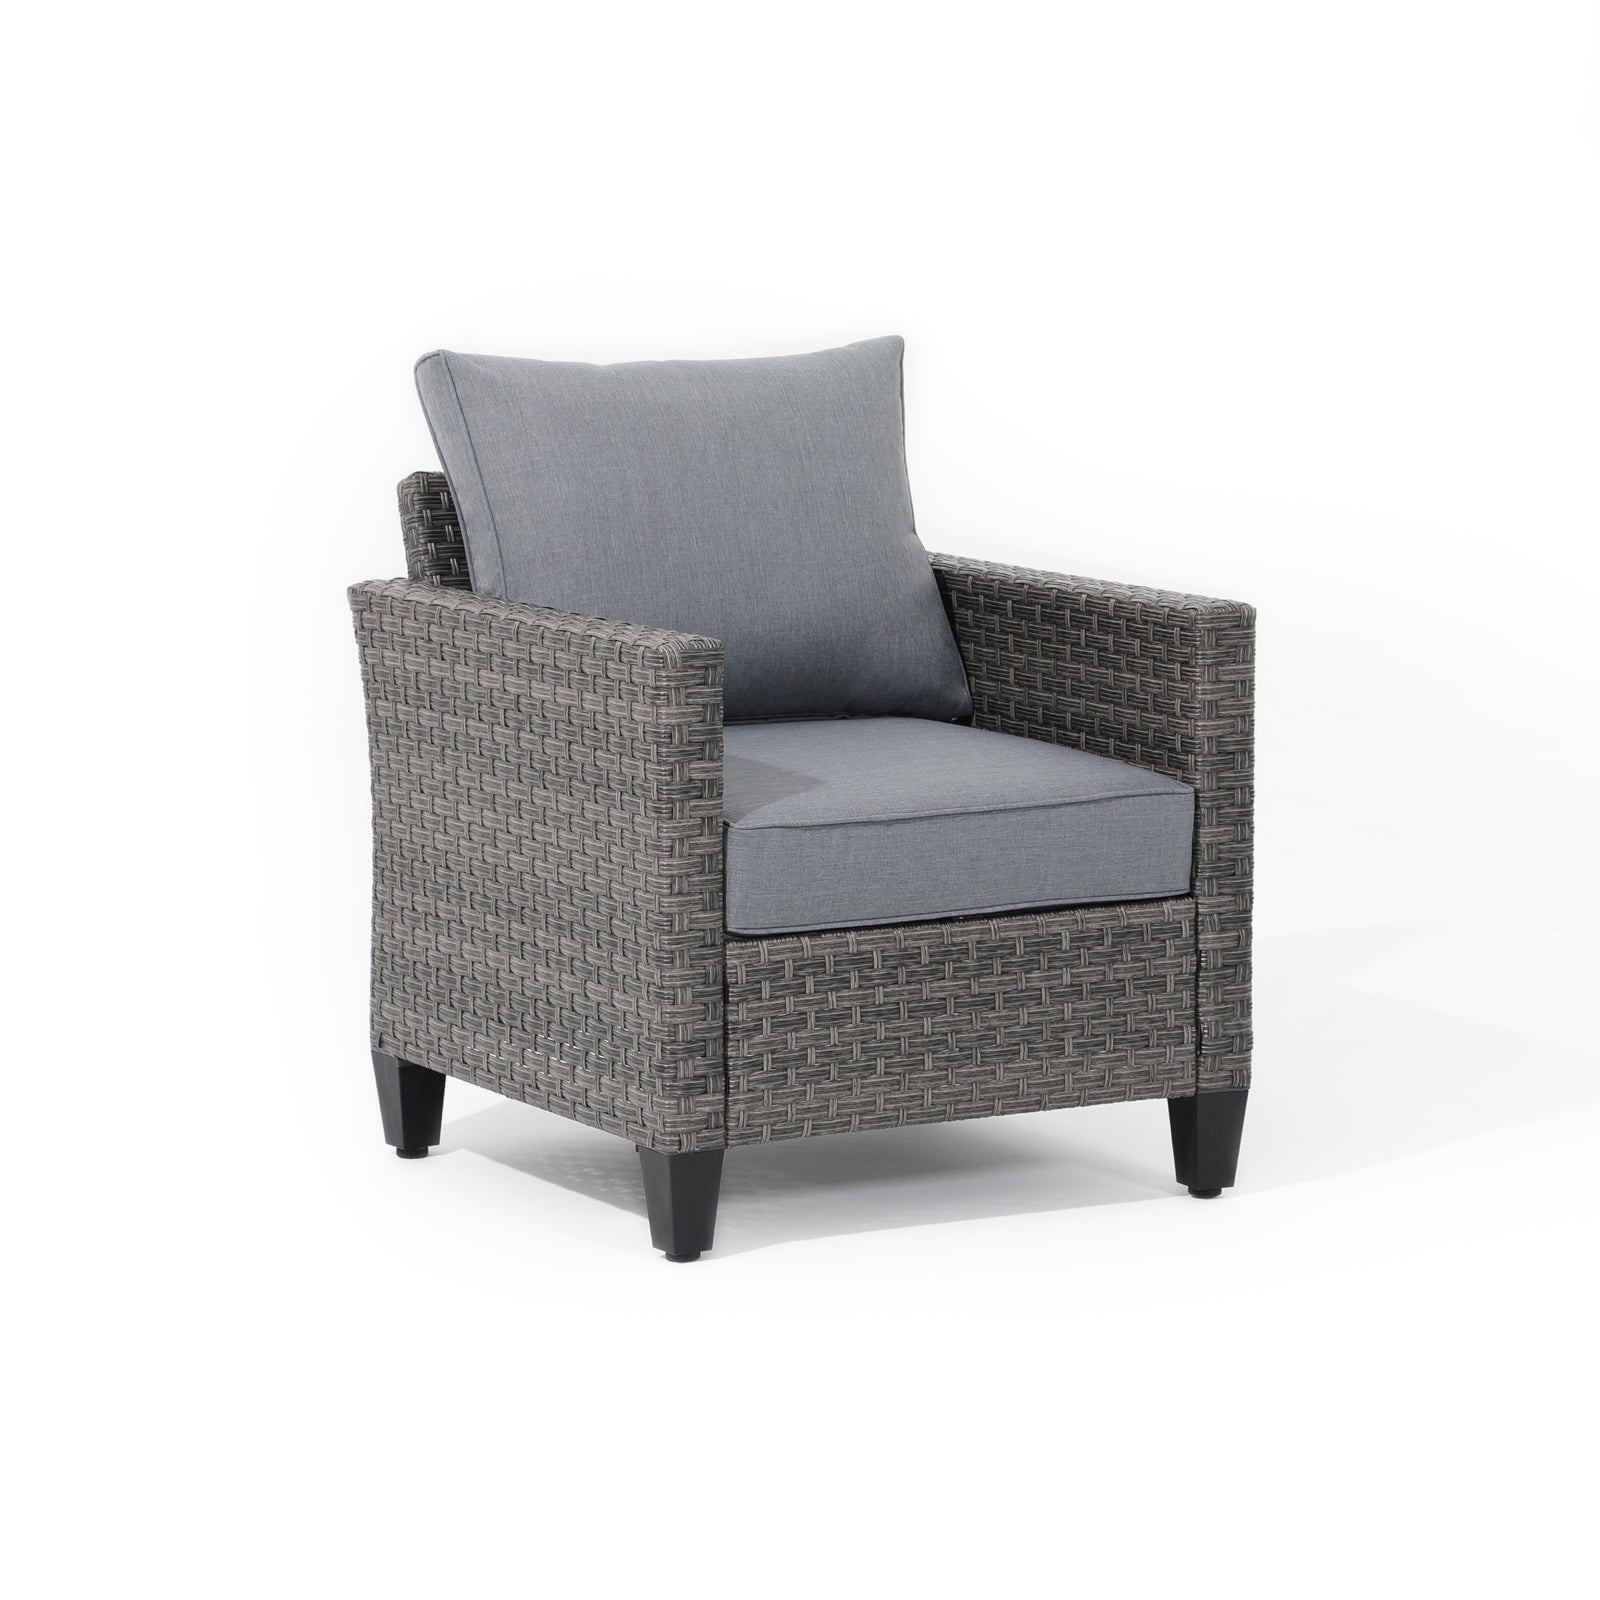 Ayia lounge chair with rattan design, grey cushions, right angle- Jardina Furniture #color_Grey